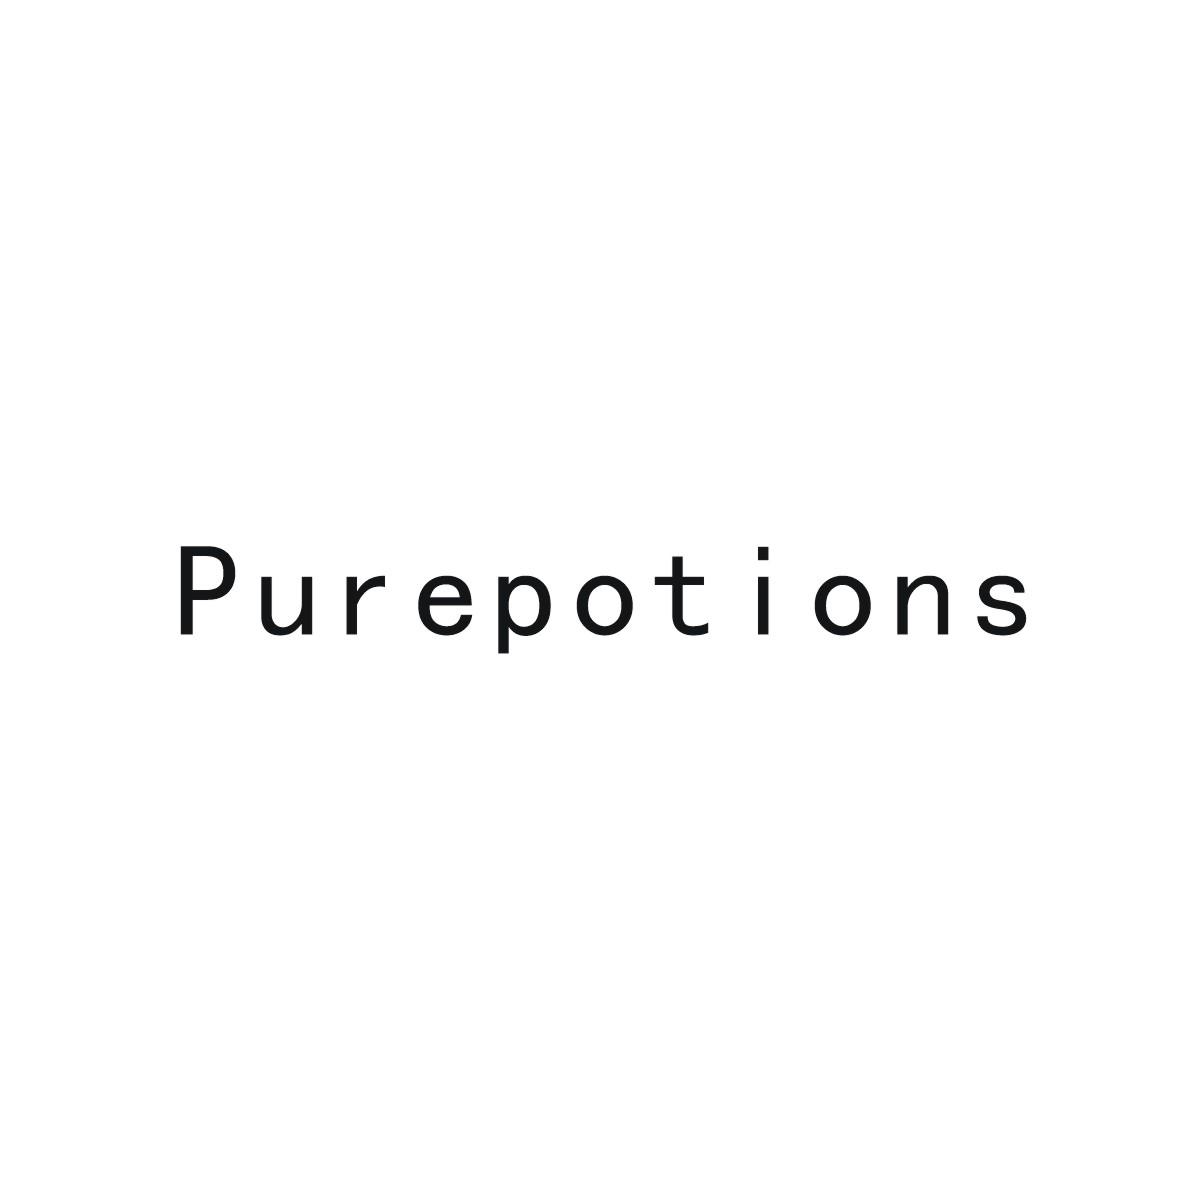 PUREPOTIONS